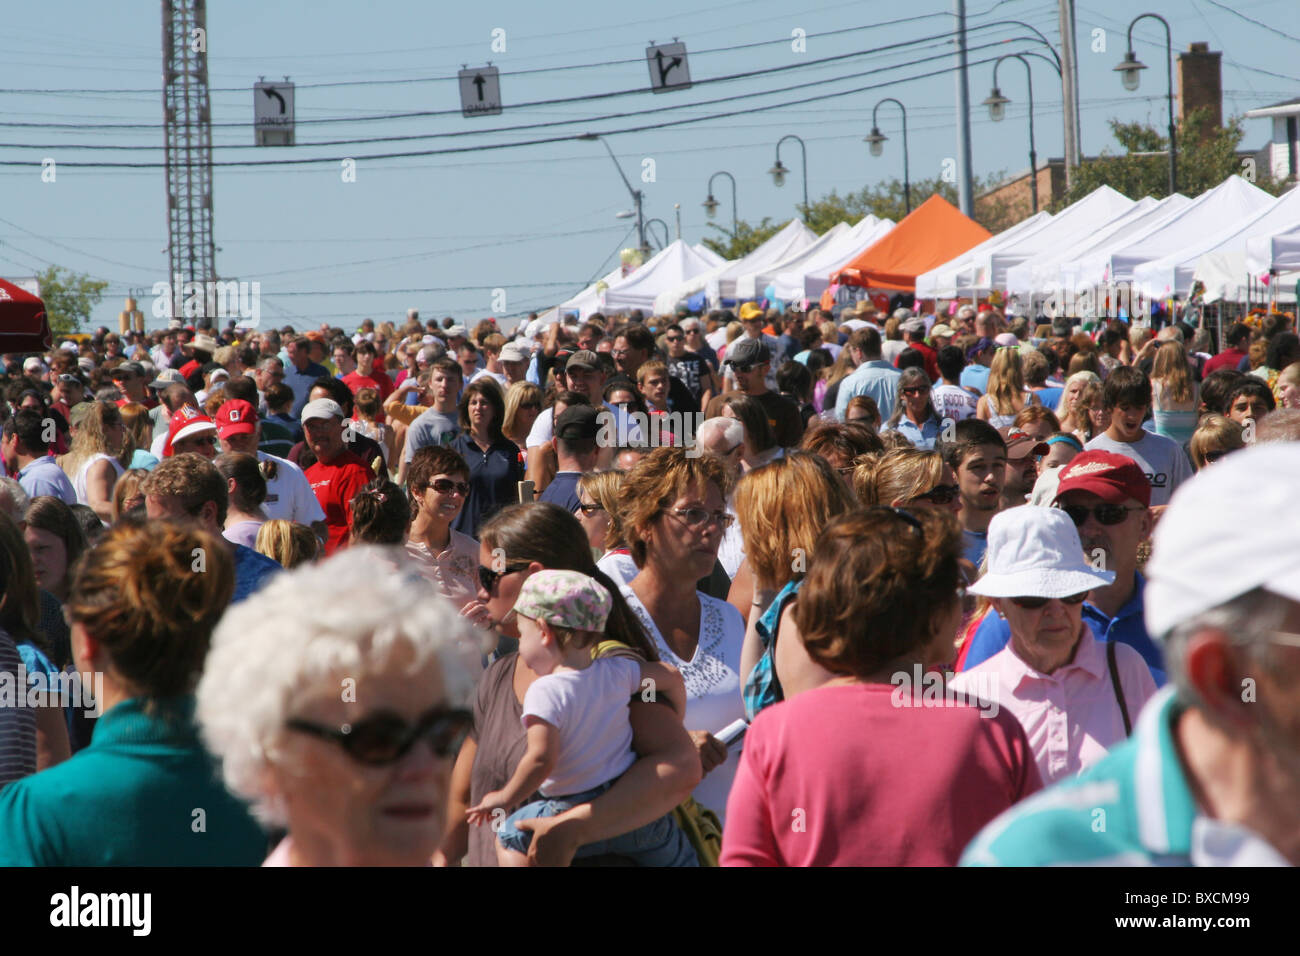 A crowd of people at a street festival. Beavercreek Popcorn Festival. Beavercreek, Ohio, USA. Stock Photo